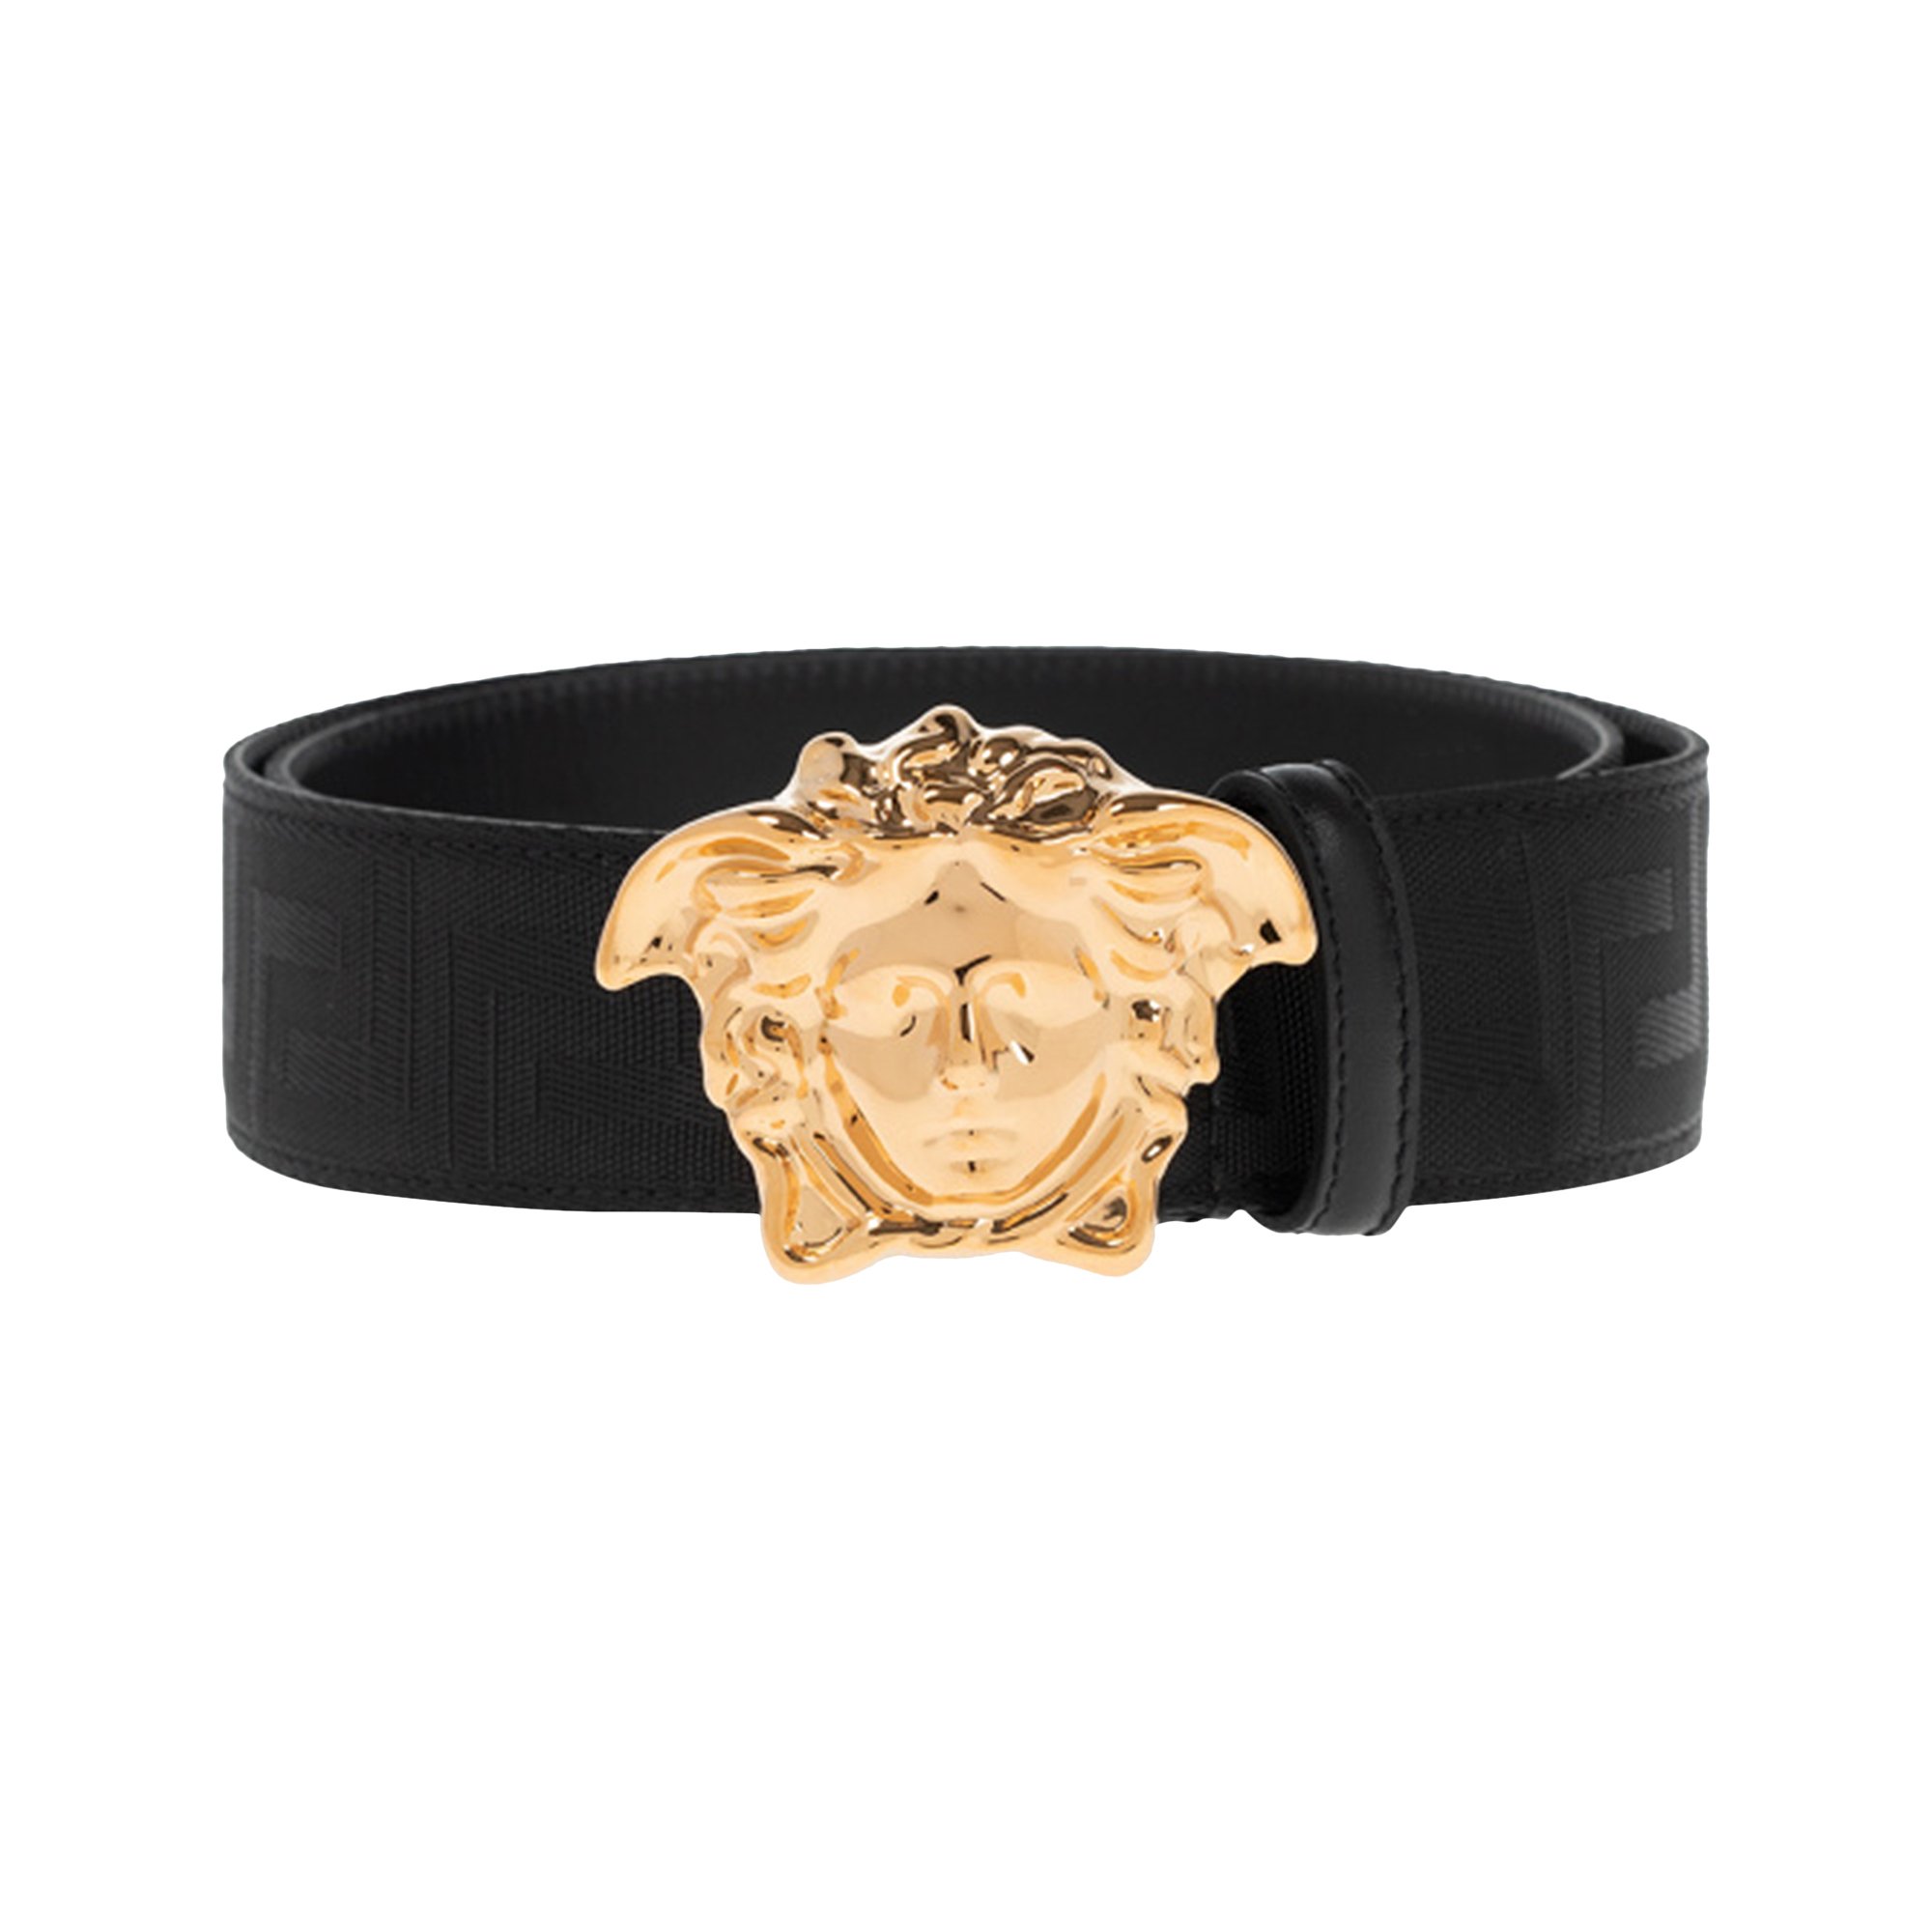 Versace Belt 'Black/Versace Gold'